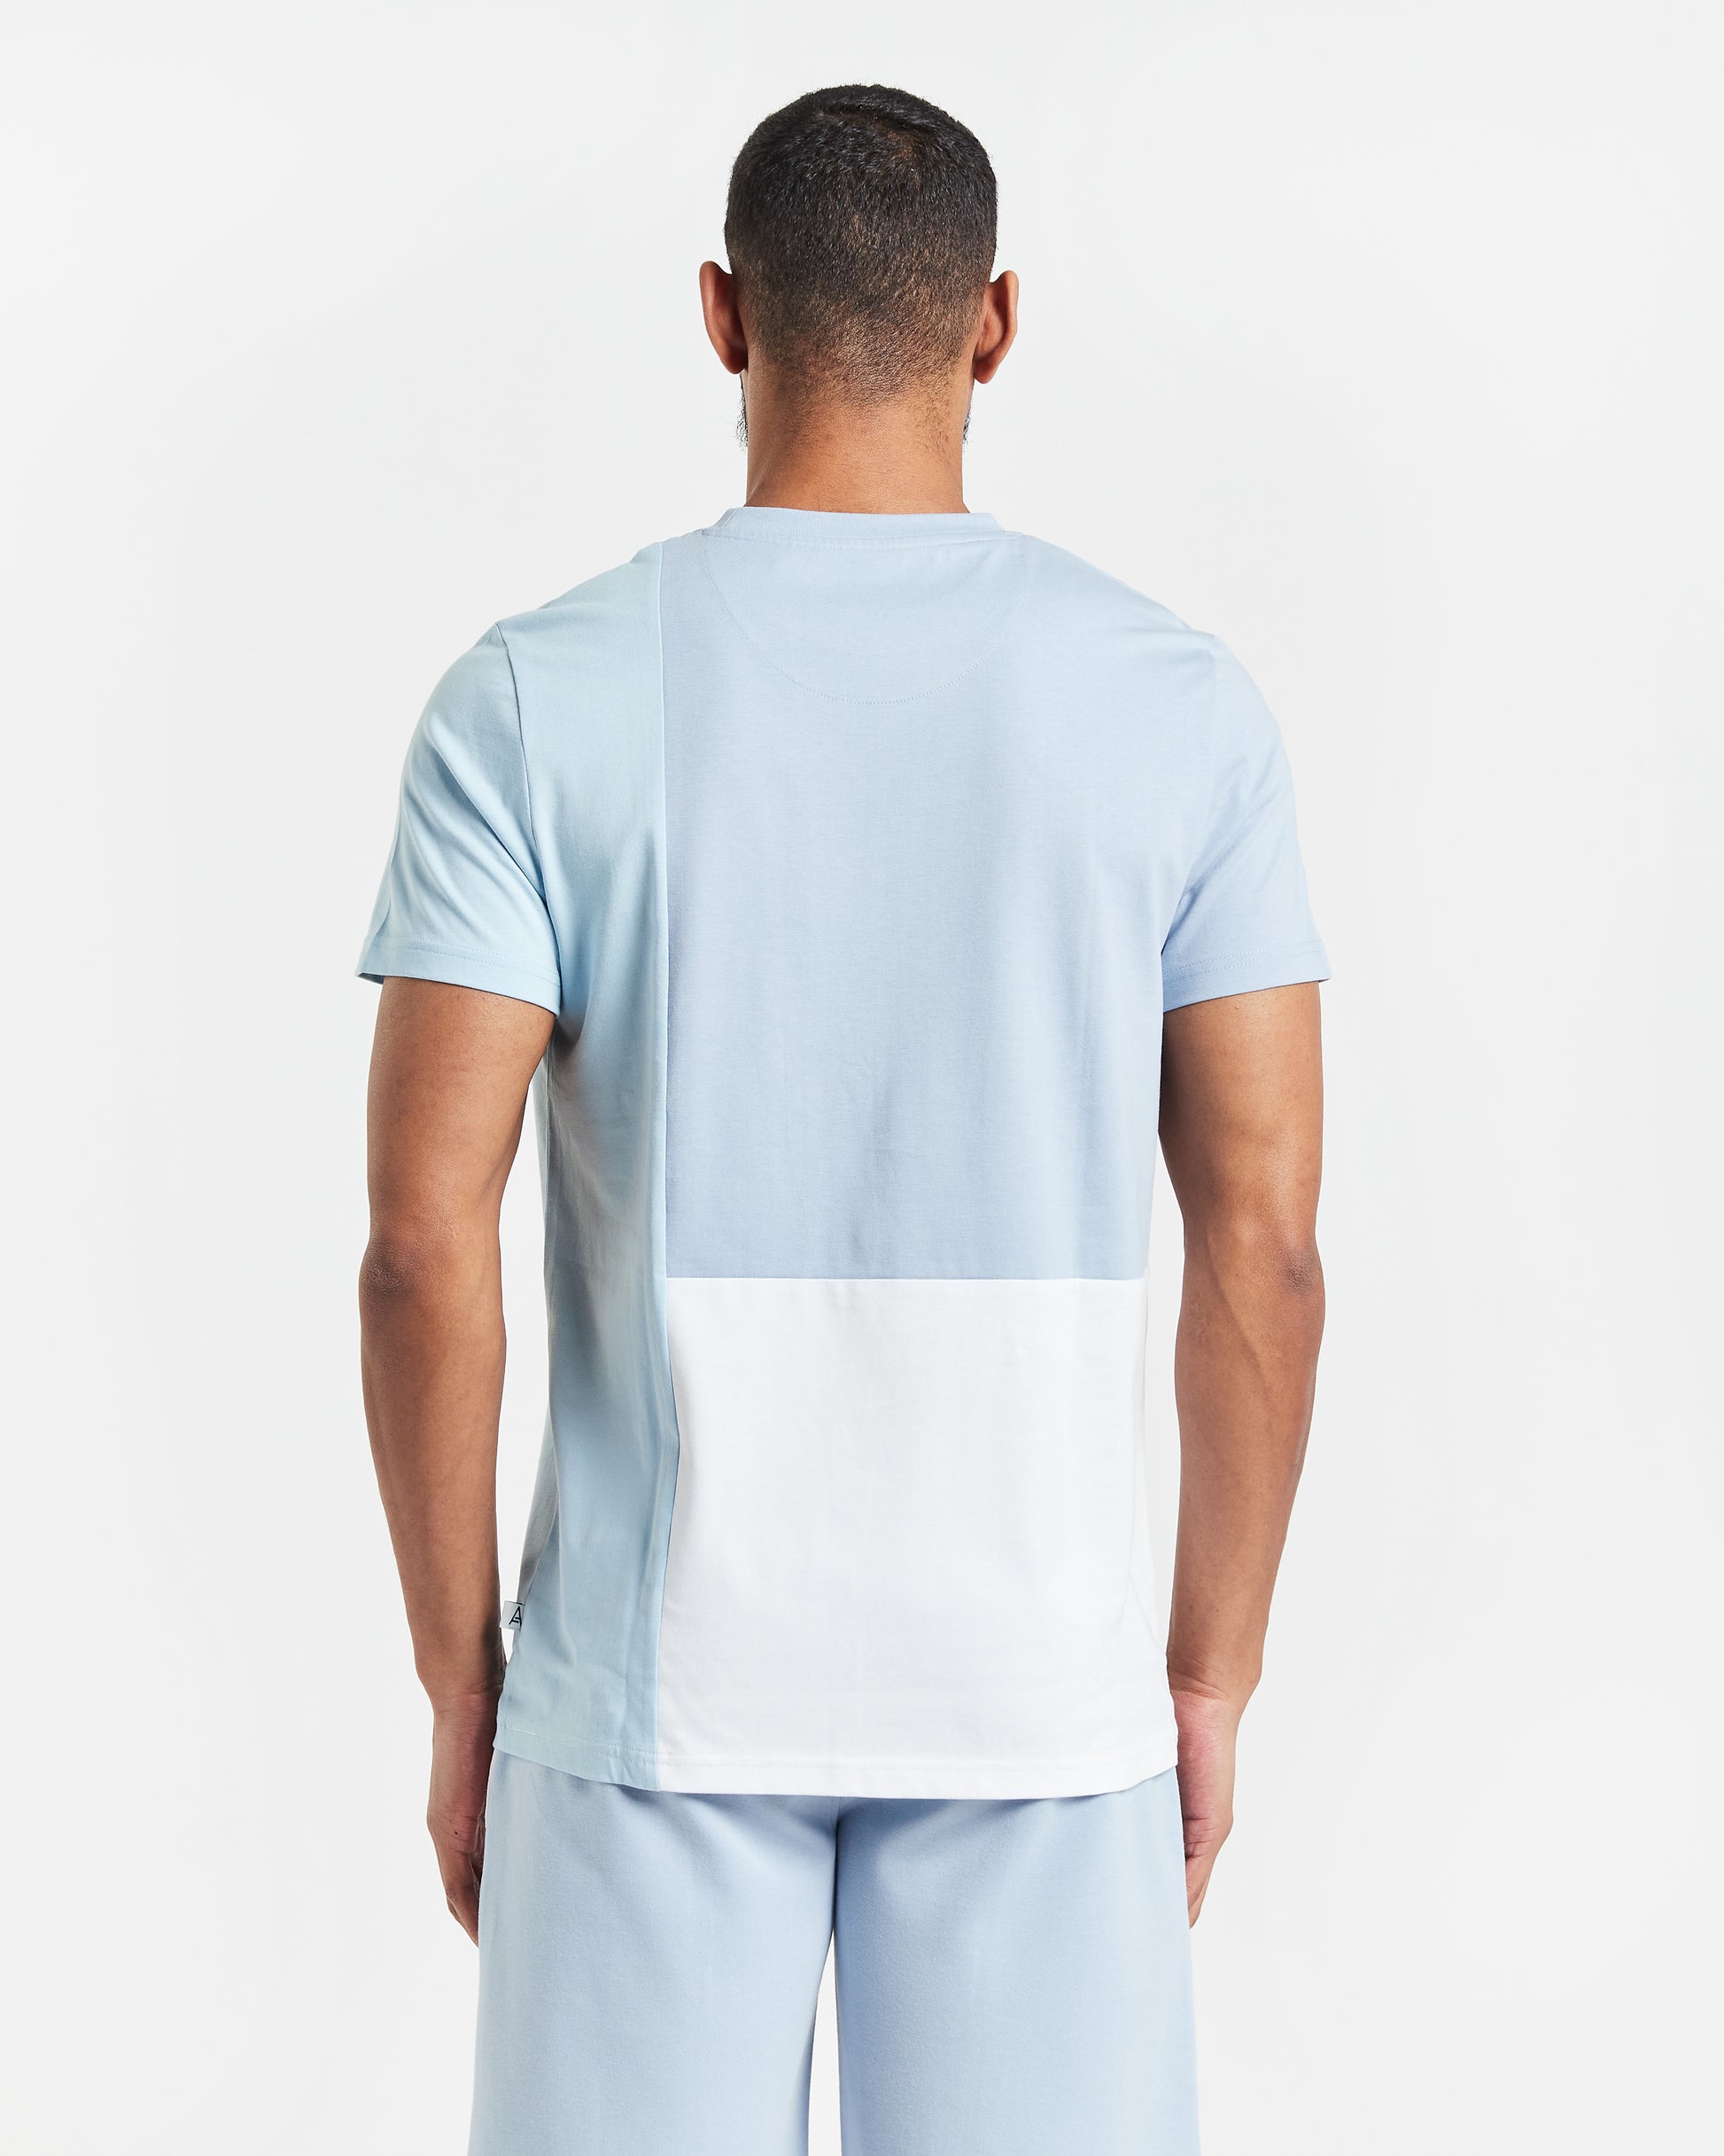 Men's Jesse T-shirt-Studio A Clothing